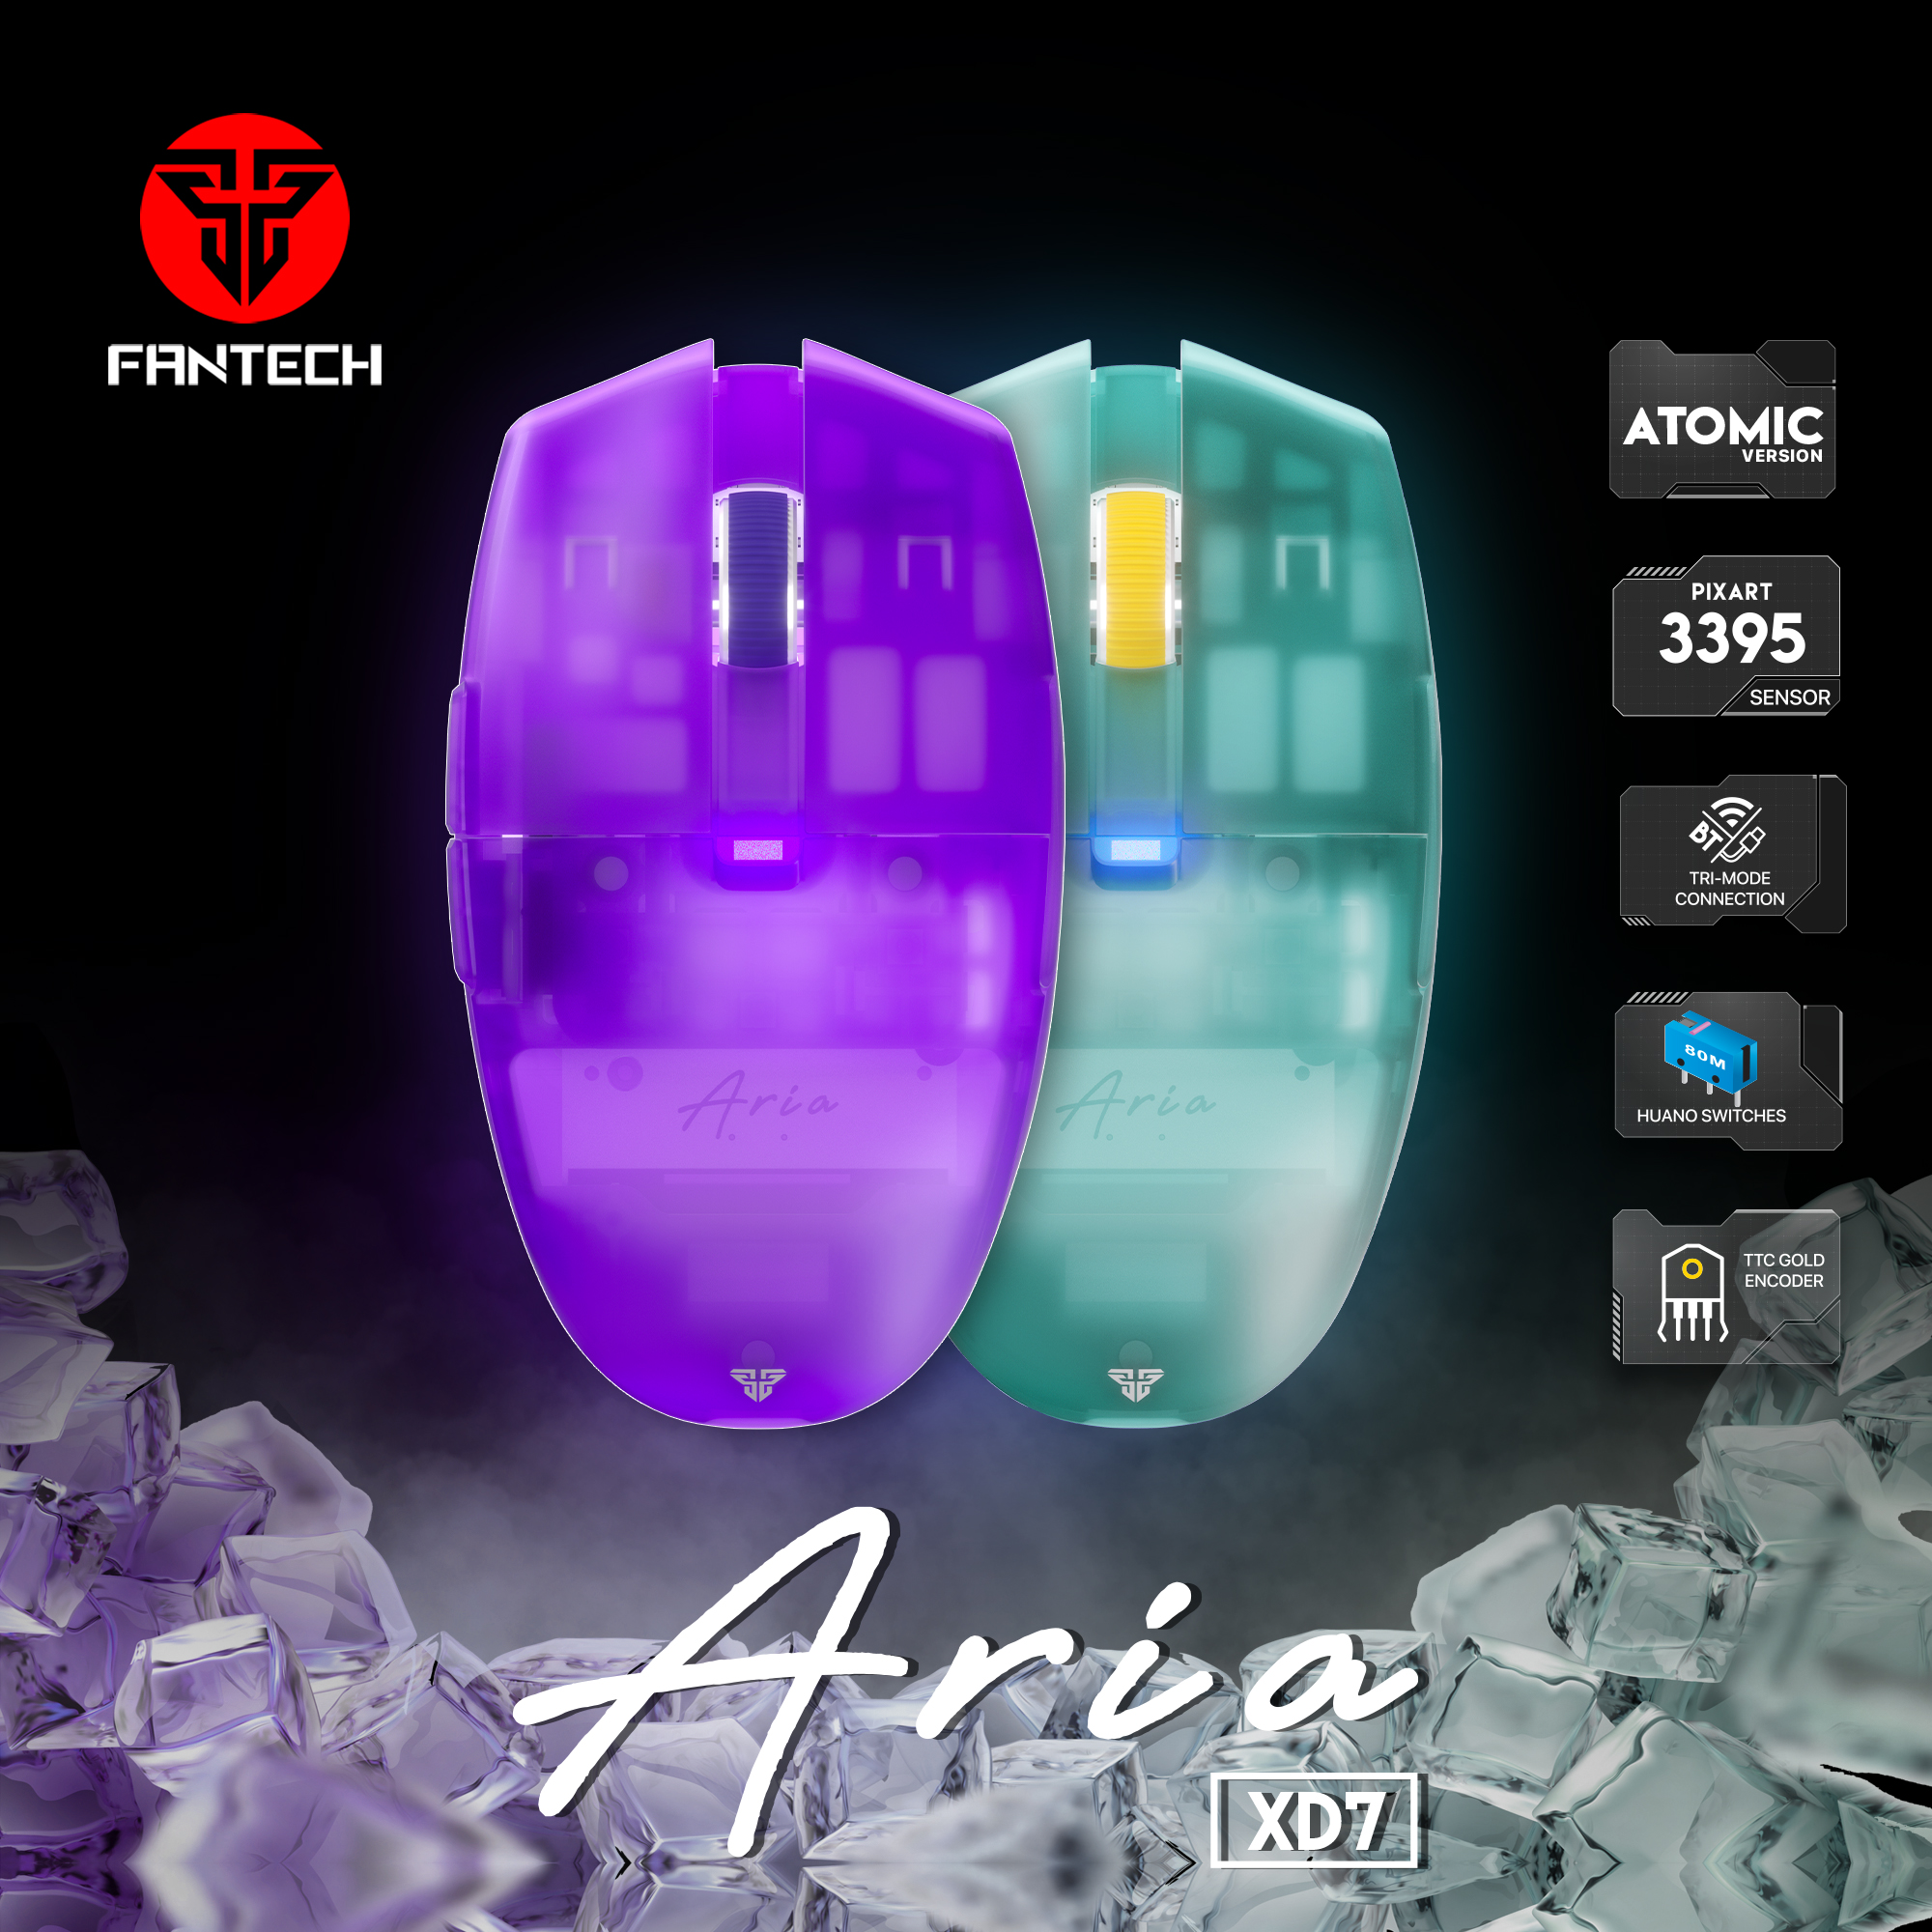 FANTECH Wireless Gaming Mouse,Medium-size ,Ergonomic Hand Grips 